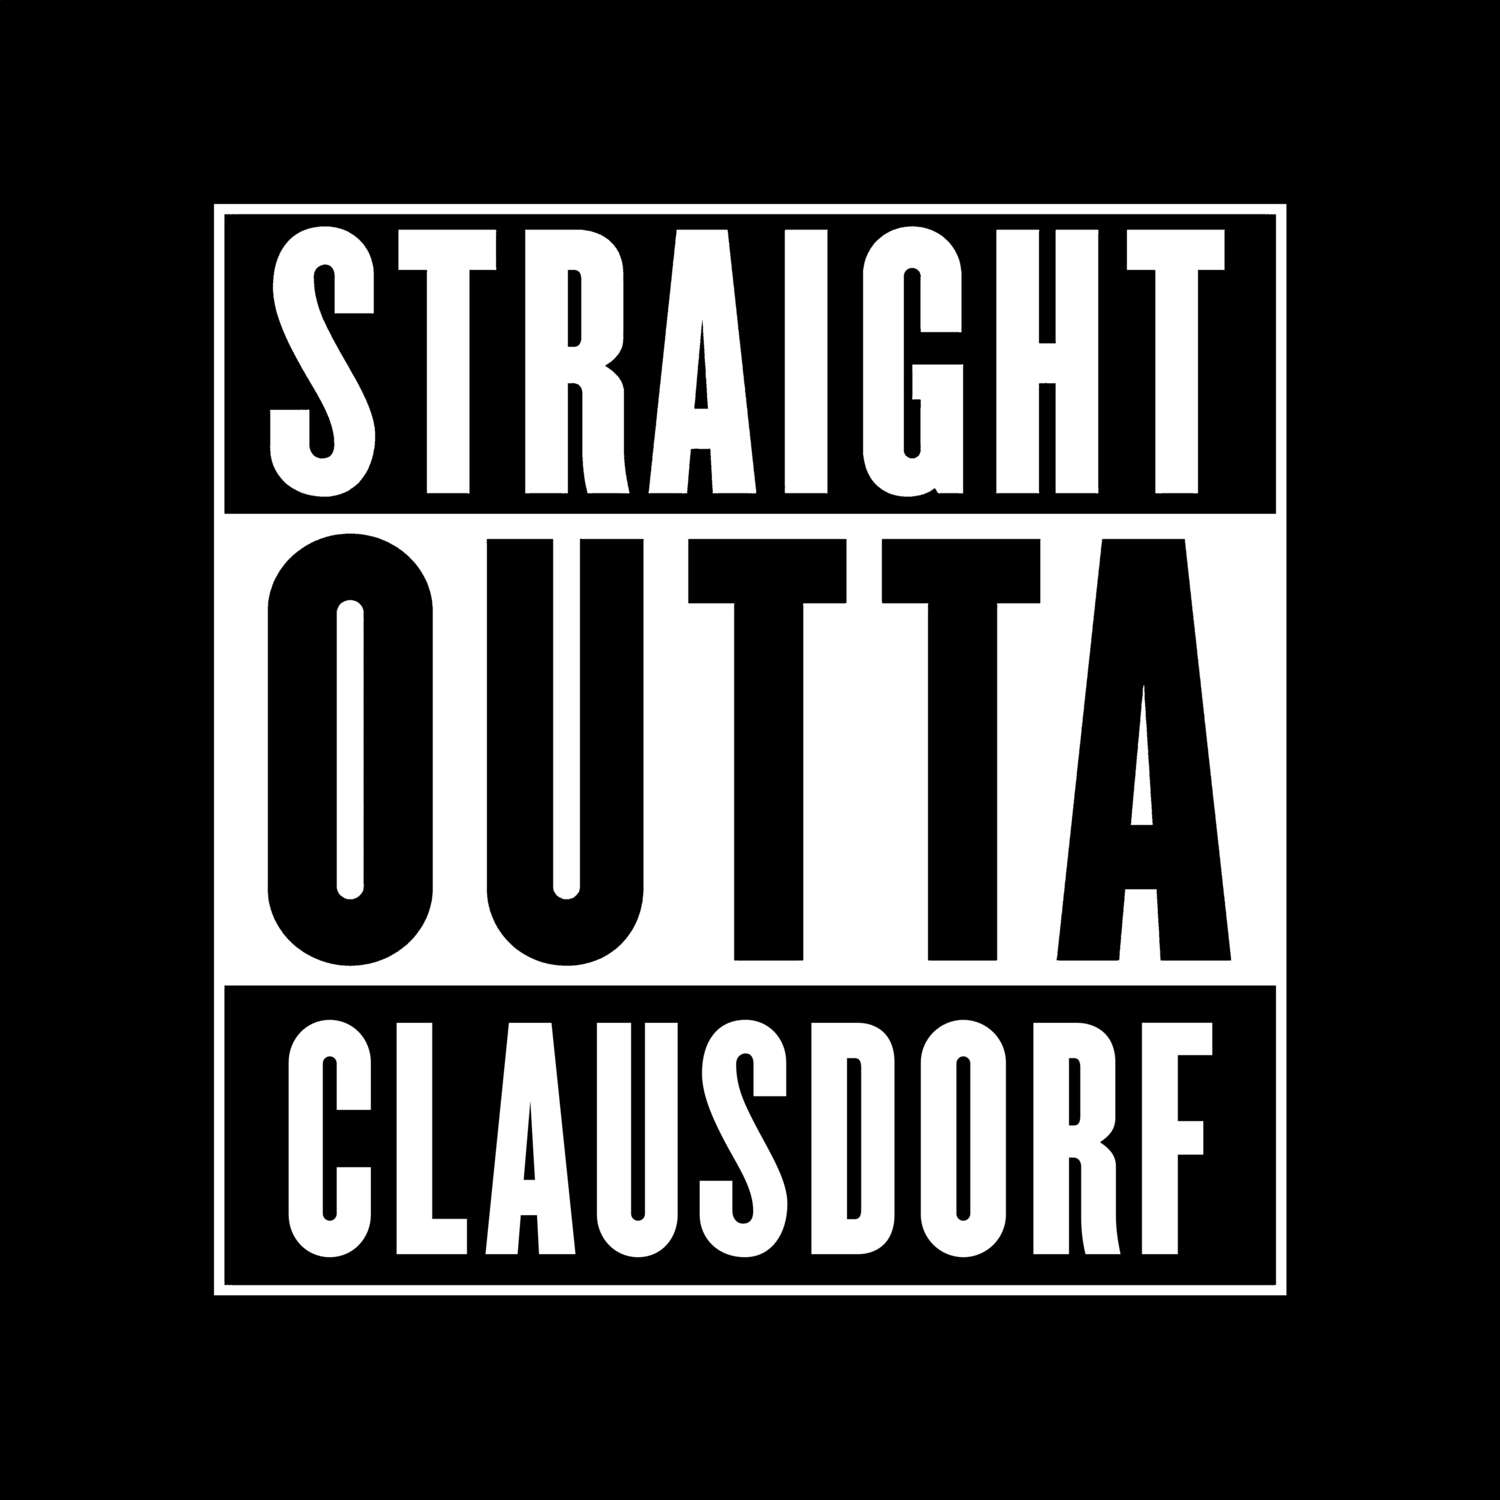 Clausdorf T-Shirt »Straight Outta«